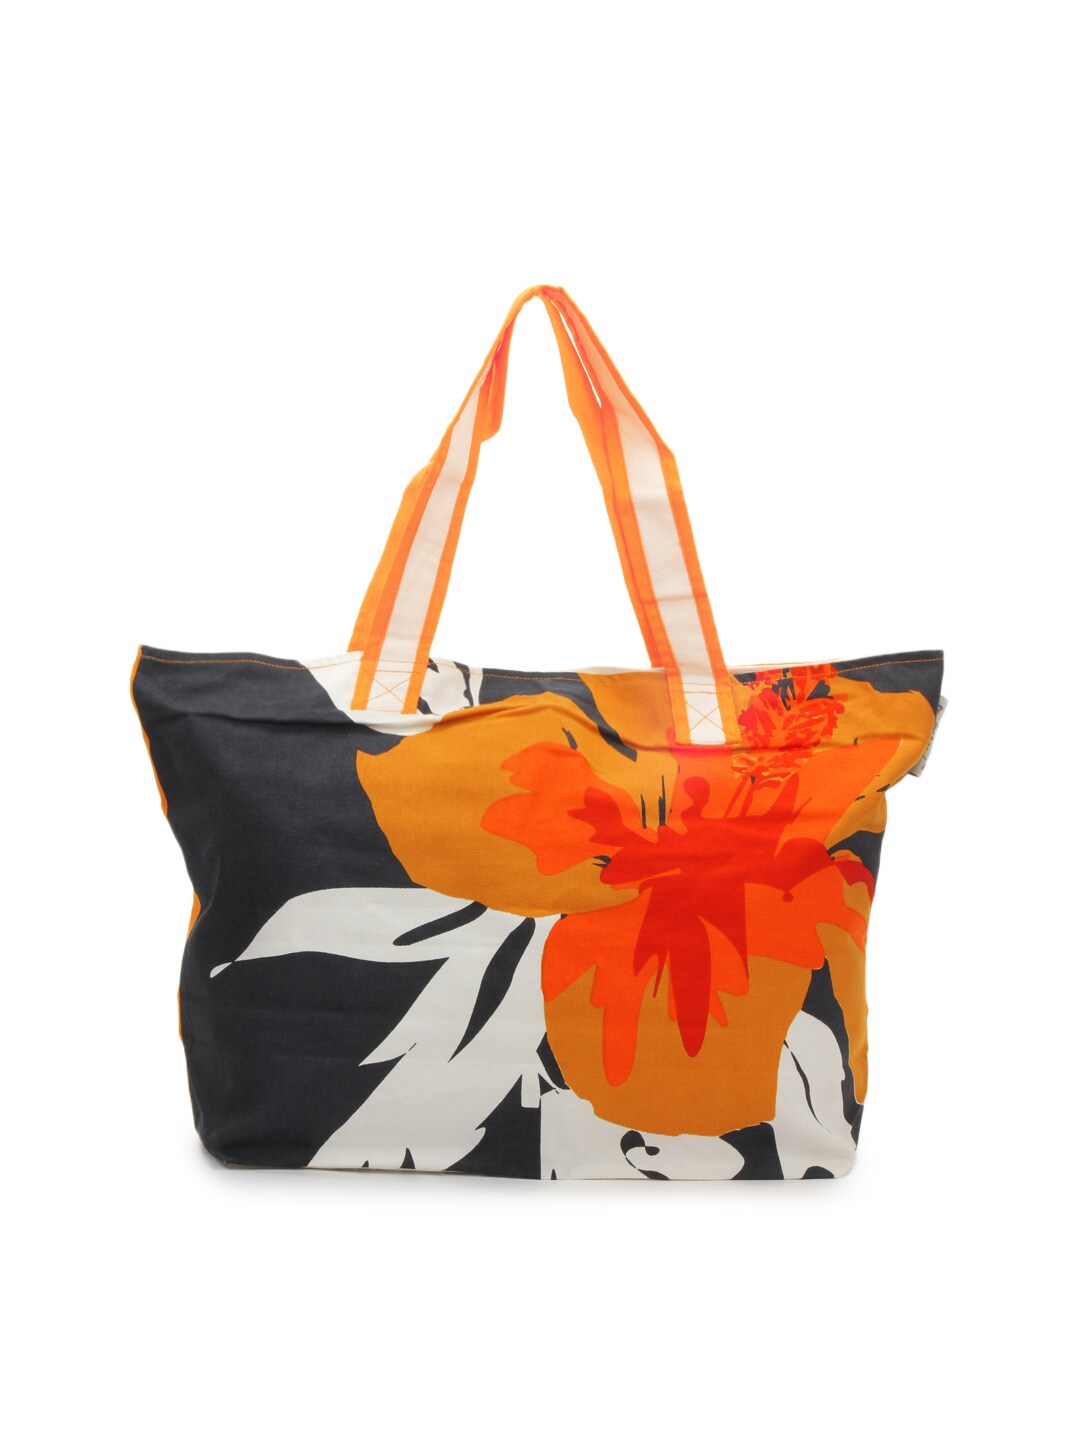 Be For Bag Women Orange And Black Tote Bag